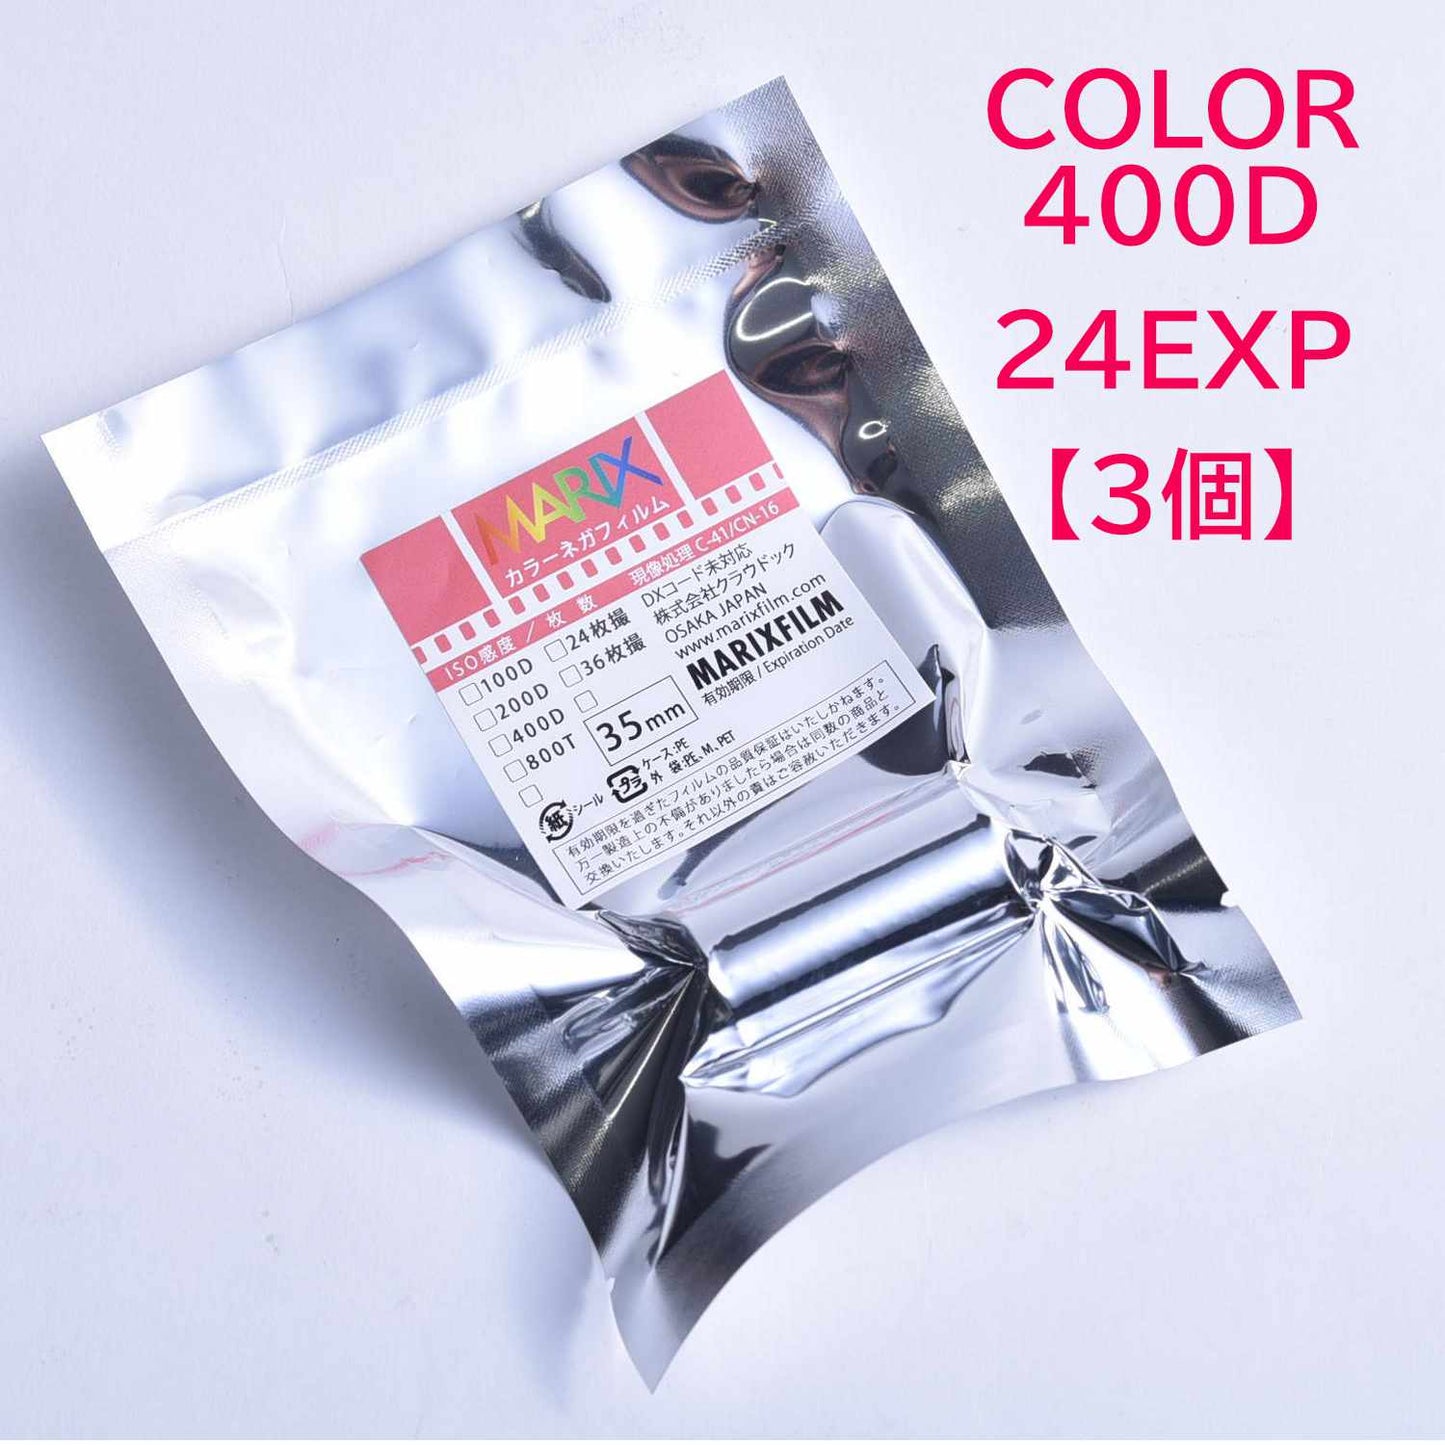 [Free shipping 3 piece set] MARIX color negative film 400D 24 sheets MARIX Color movie NegaFilm